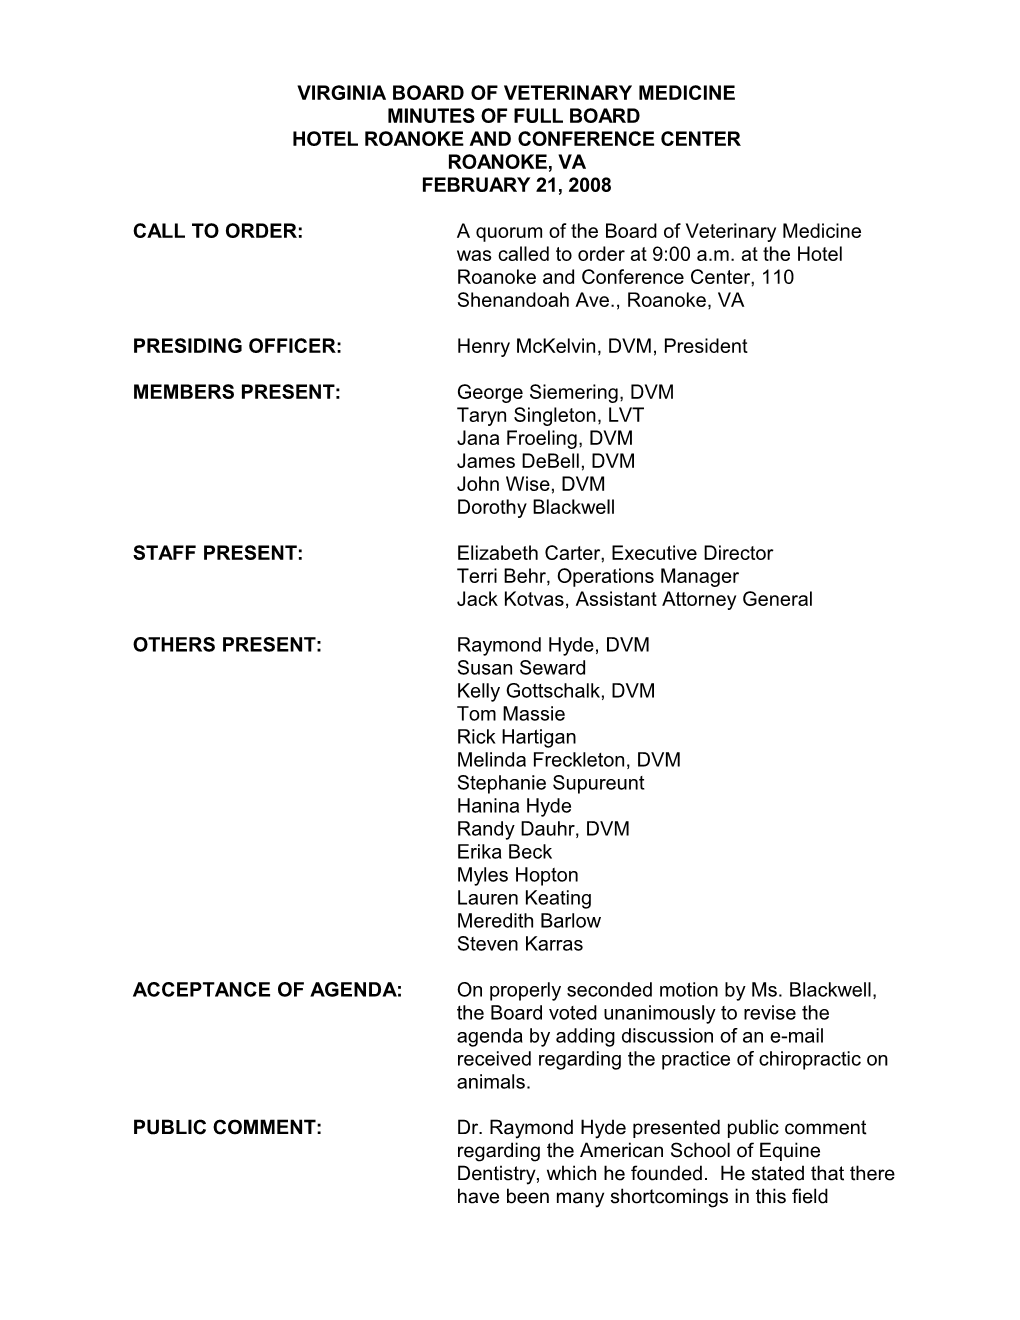 Board of Veterinary Medicine - Minutes of Full Board - February 21, 2008